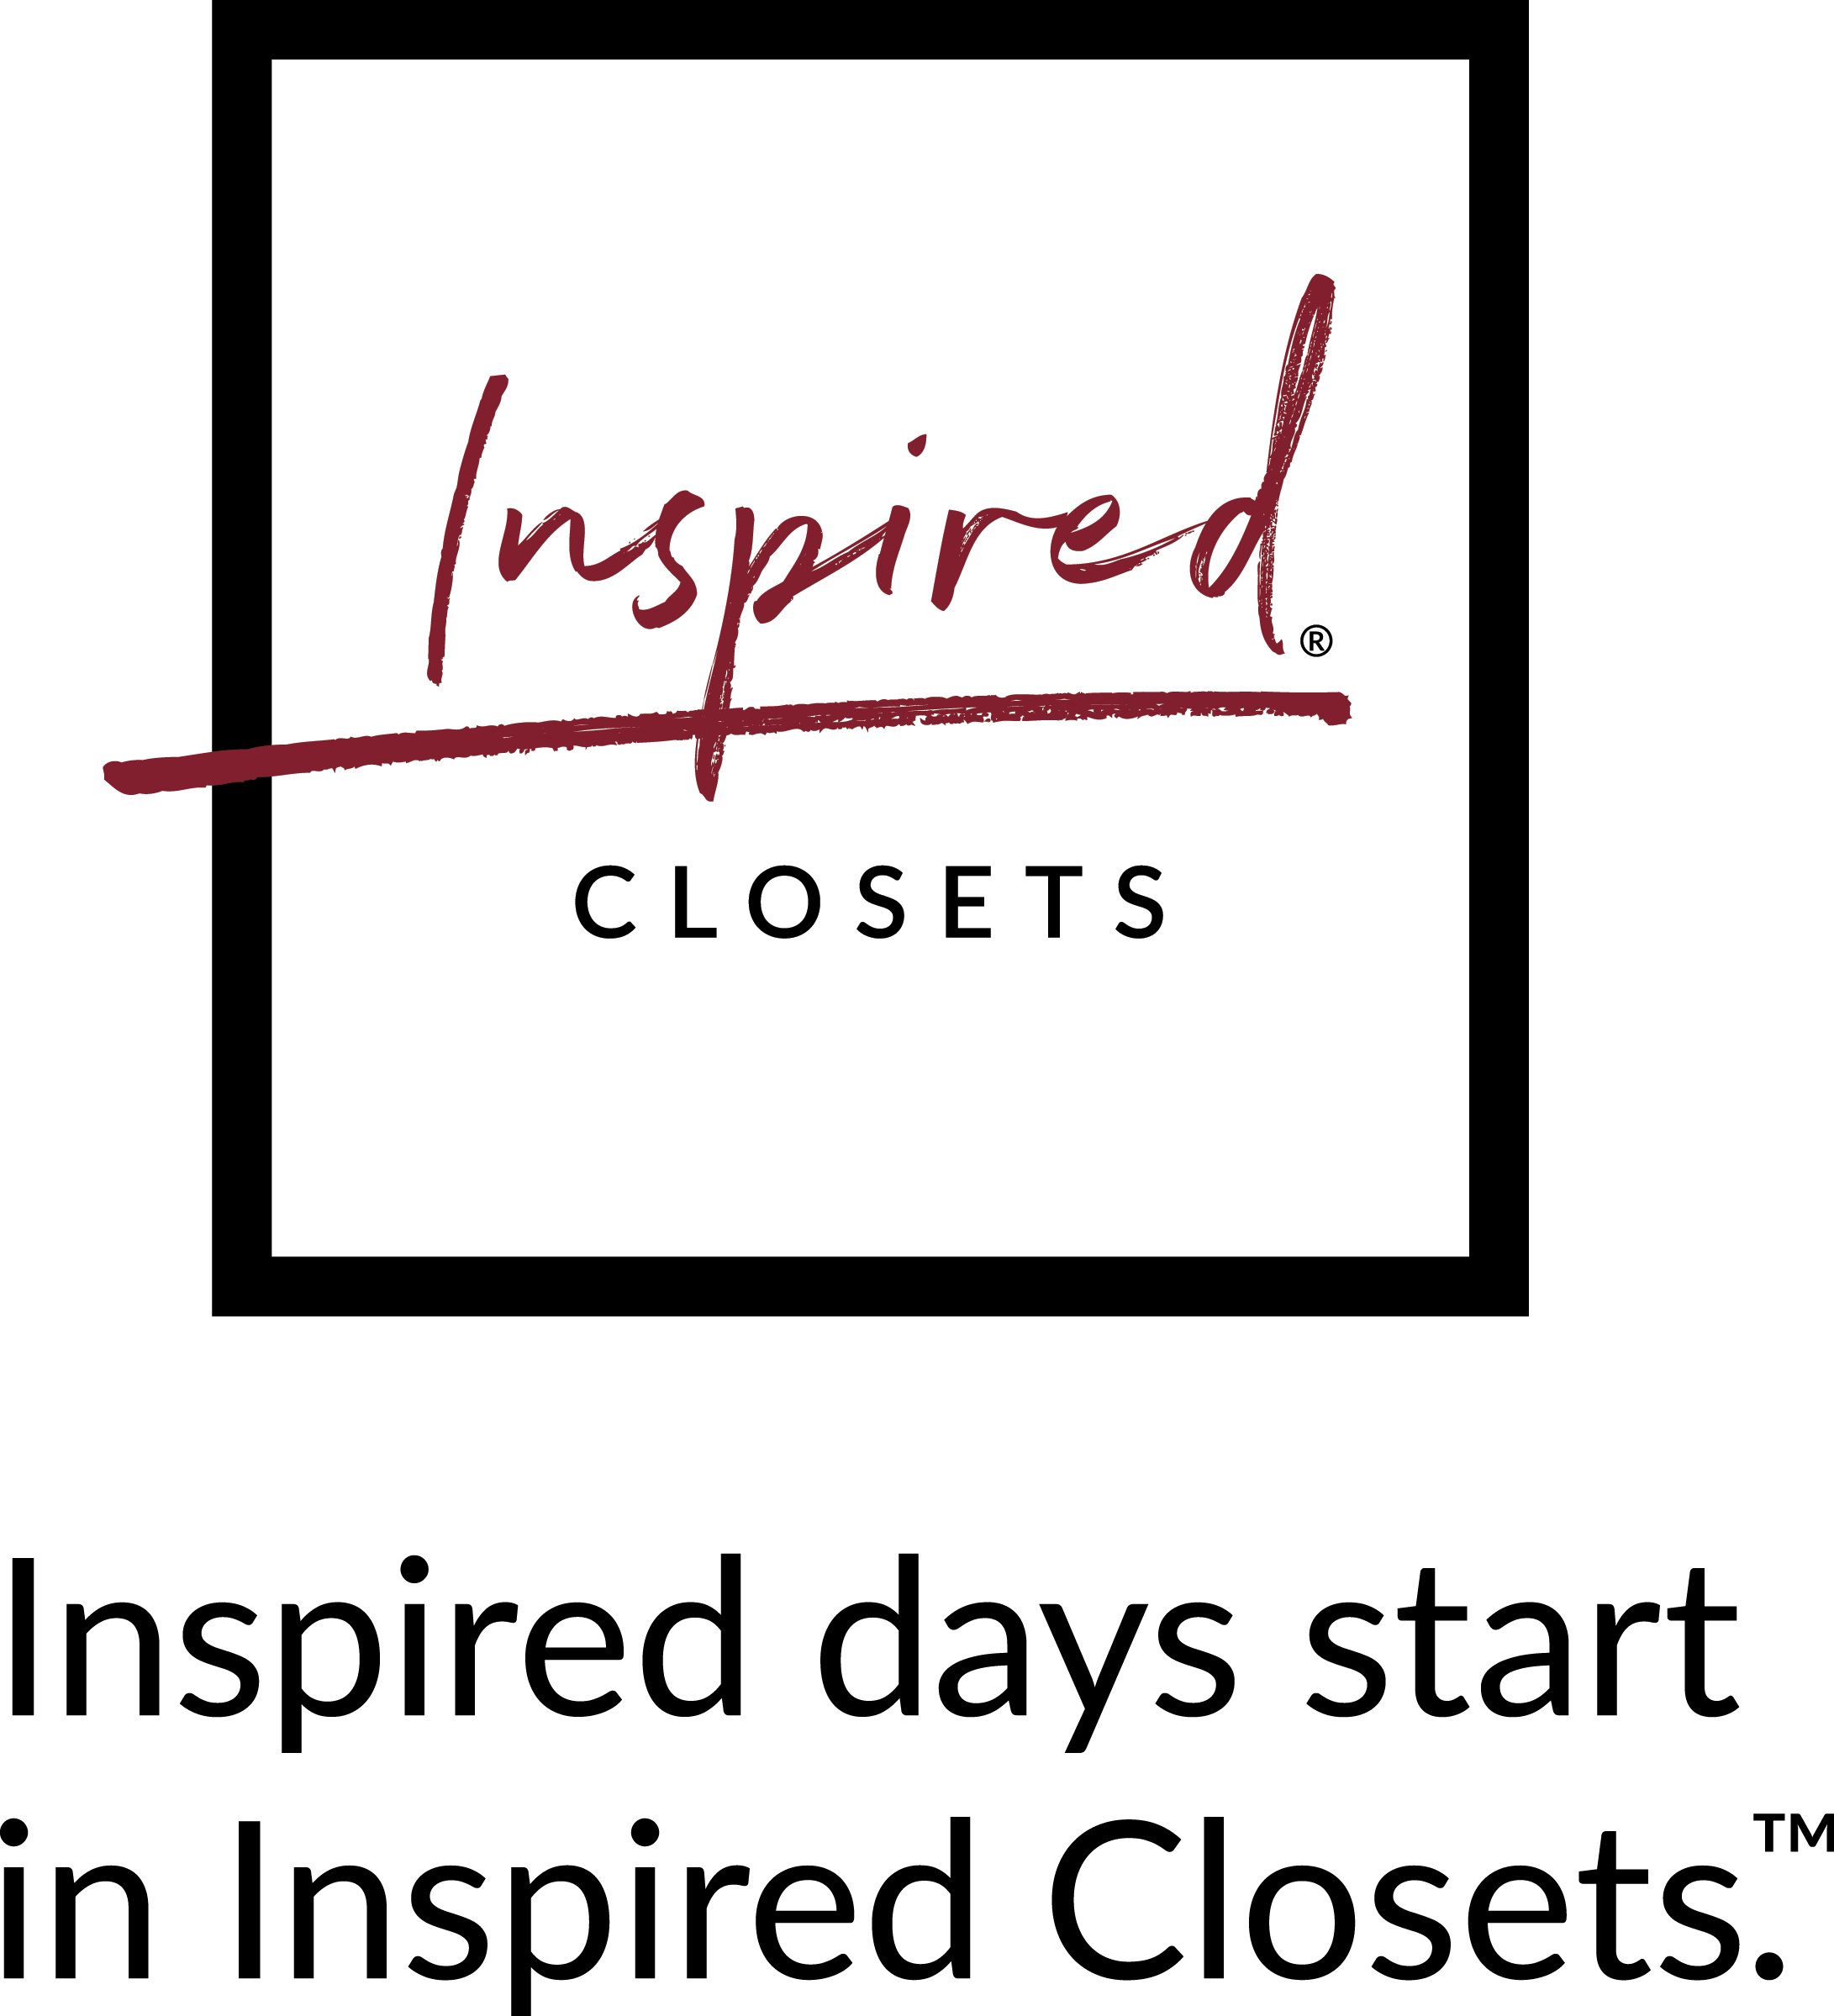 Inspired Closets logo